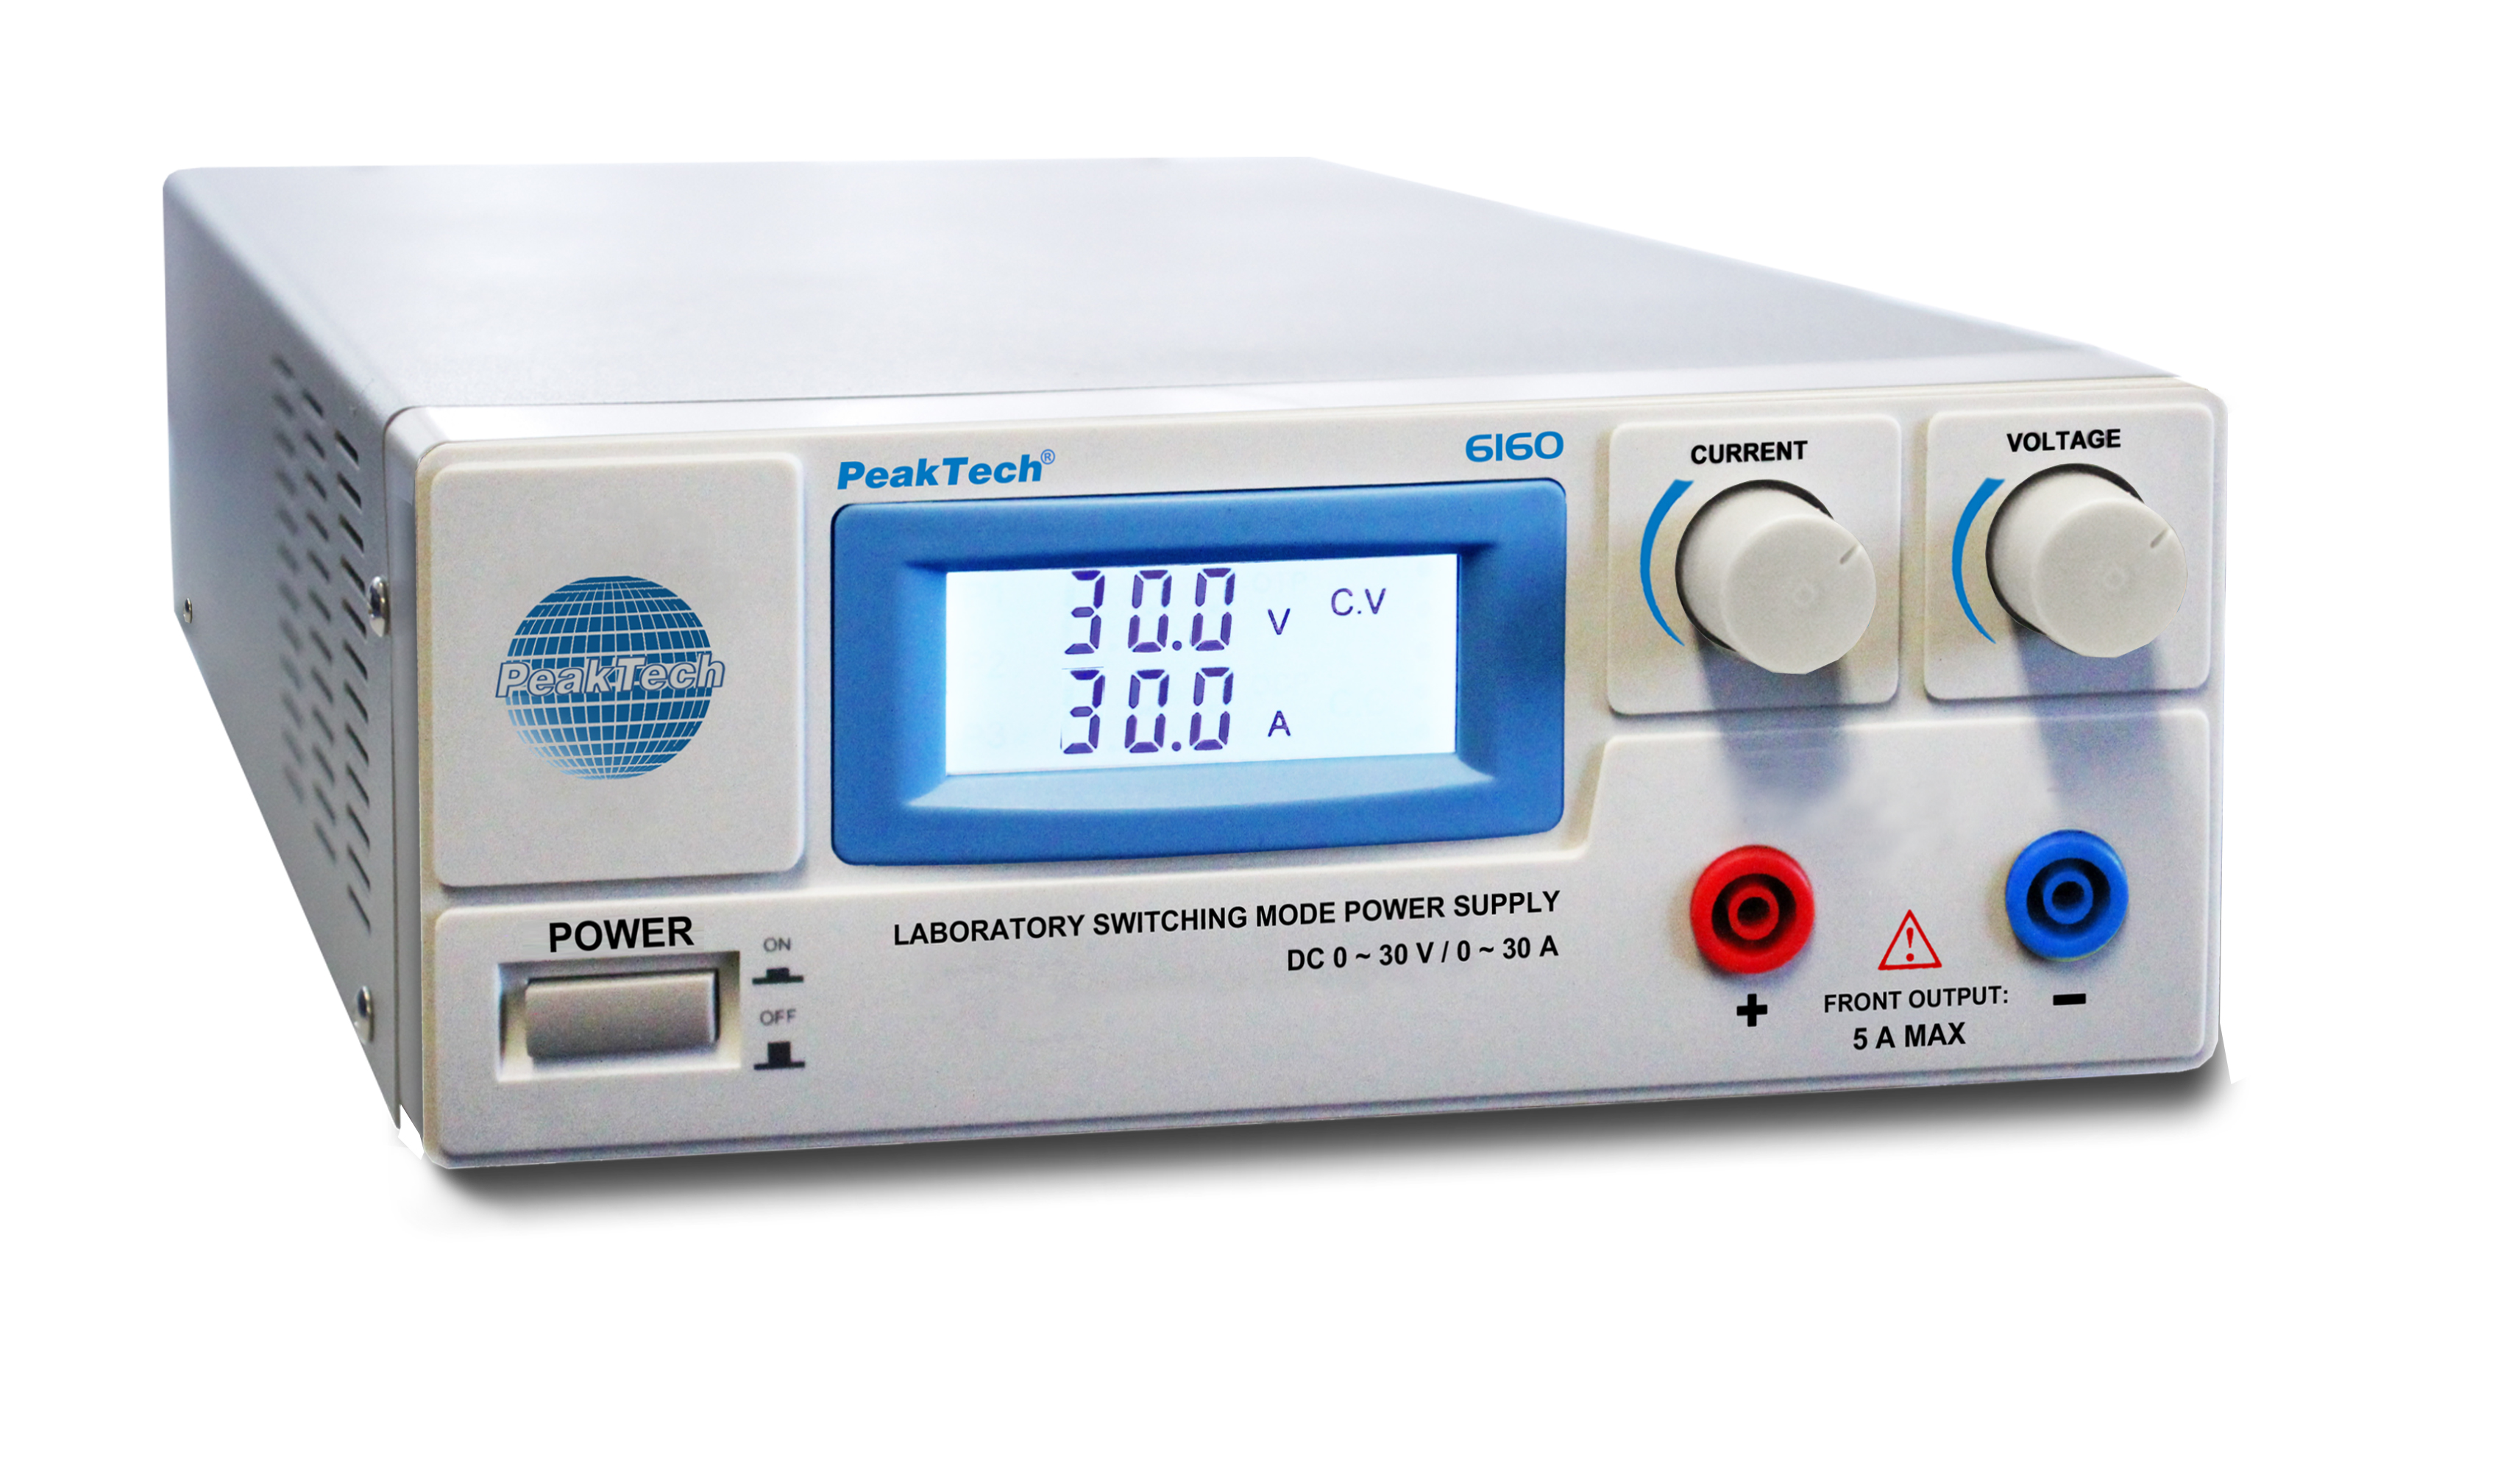 «PeakTech® P 6160» Laboratory Switching Mode Power Supply